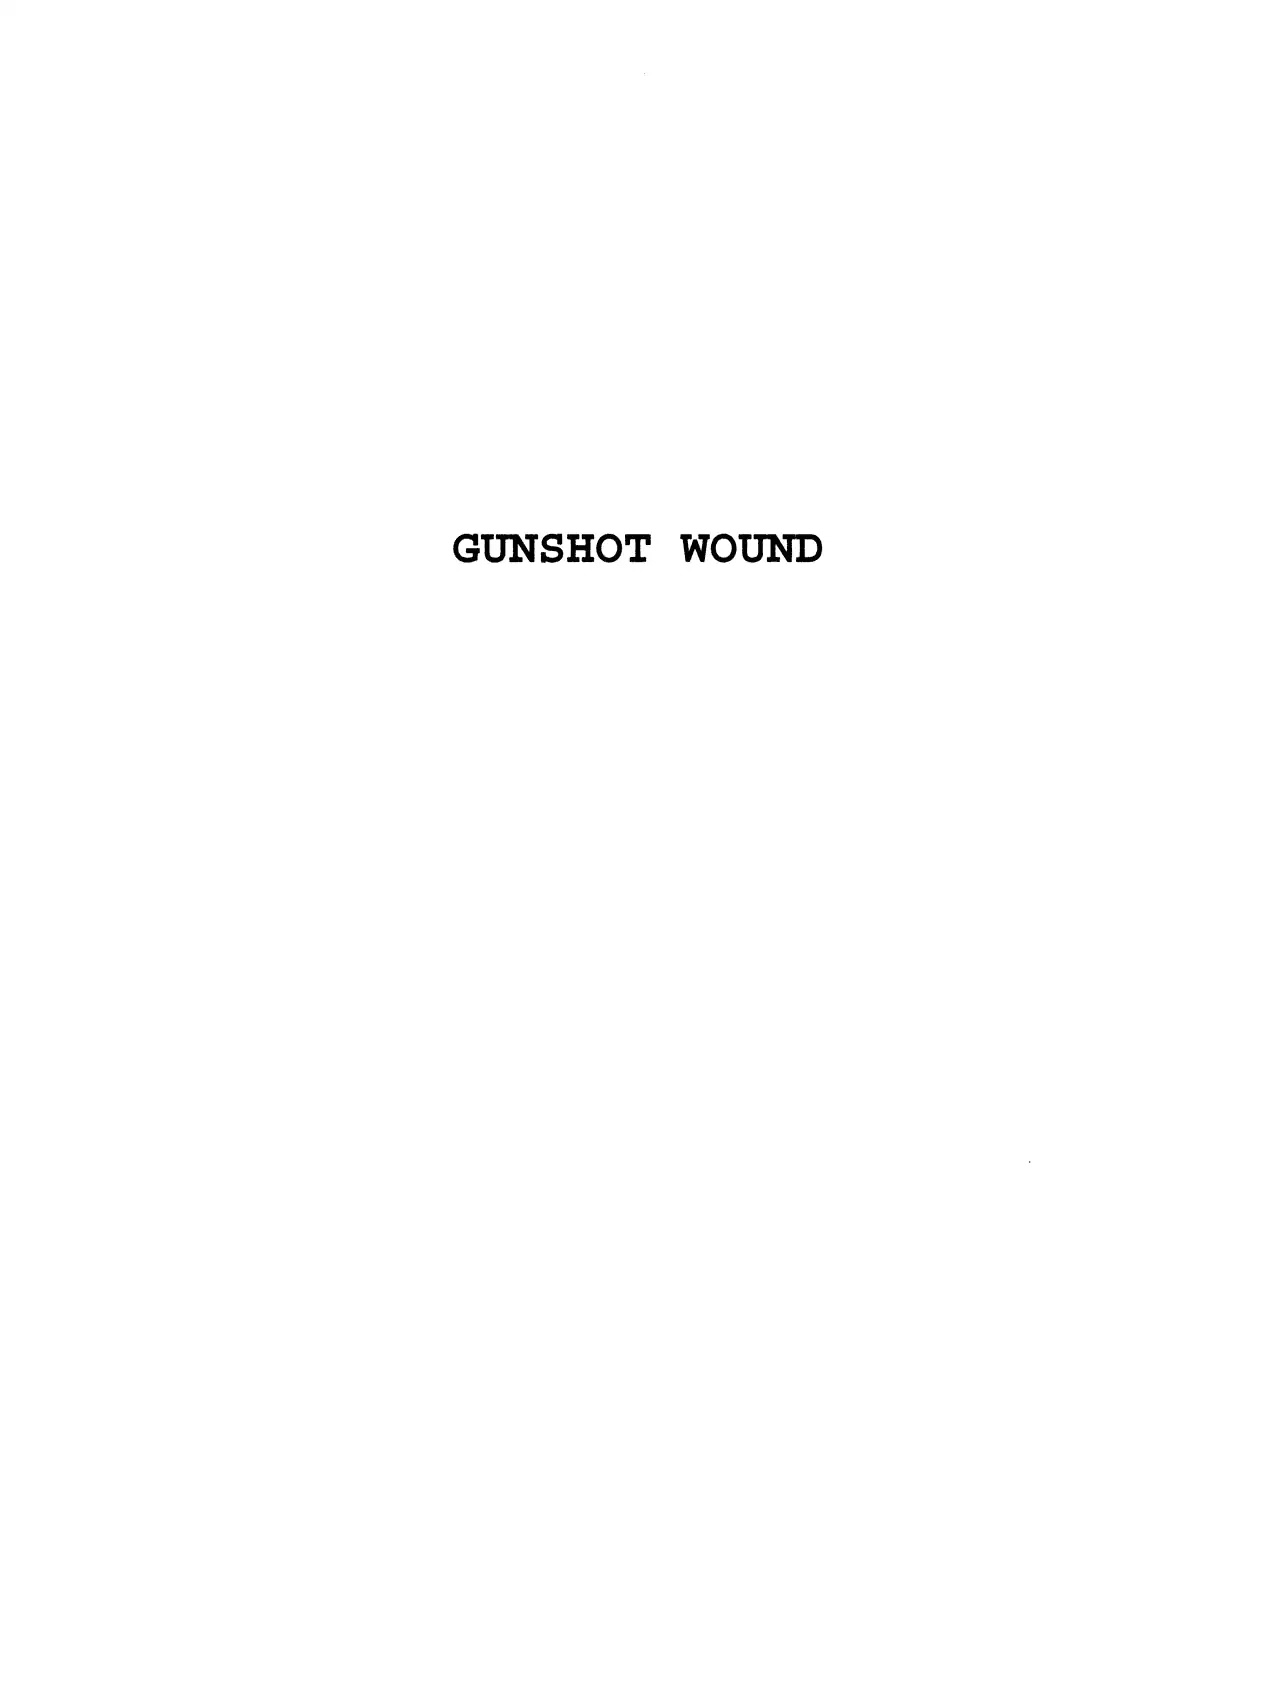 Black Jack Vol.9 Chapter 9: Gunshot Wound - Picture 1